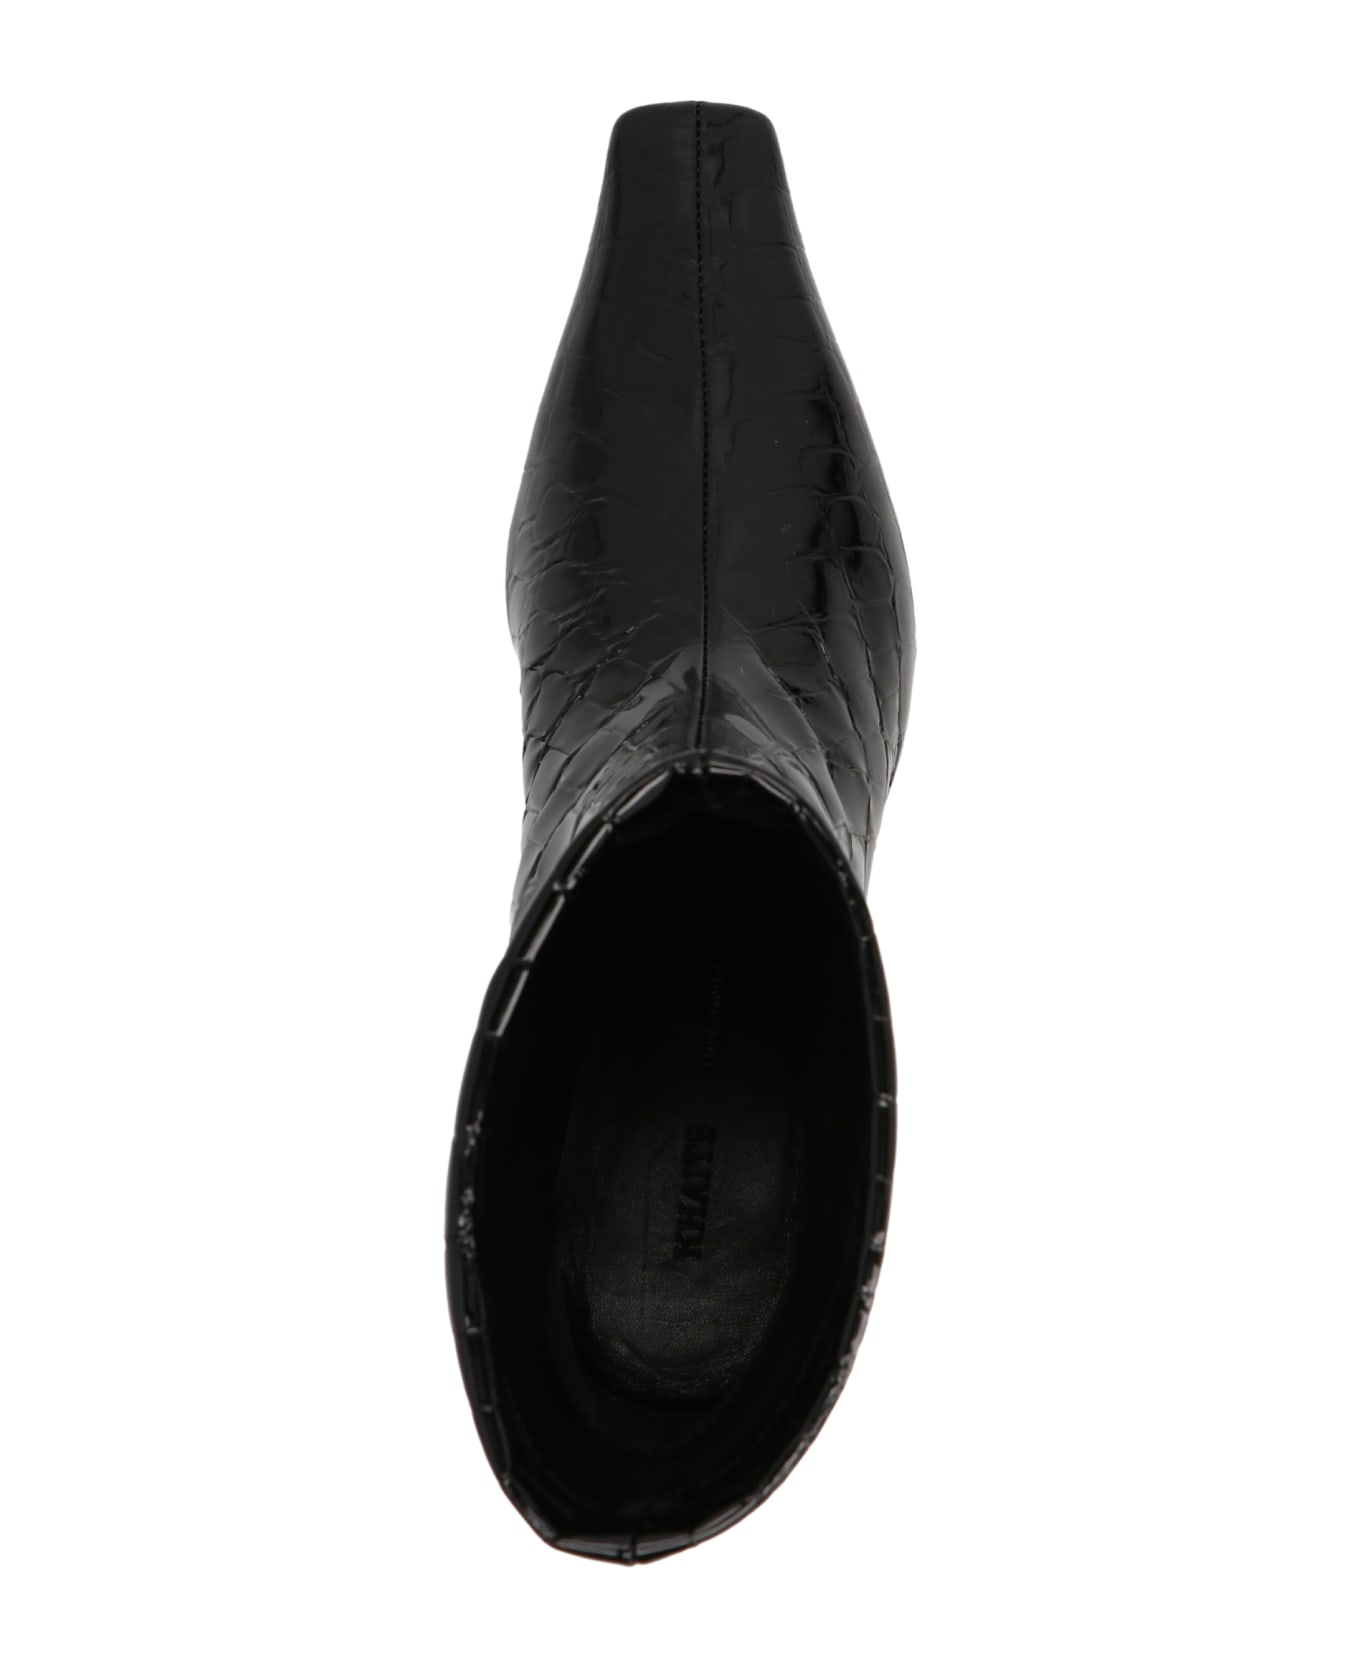 Khaite 'arizona' Ankle Boots - Black  